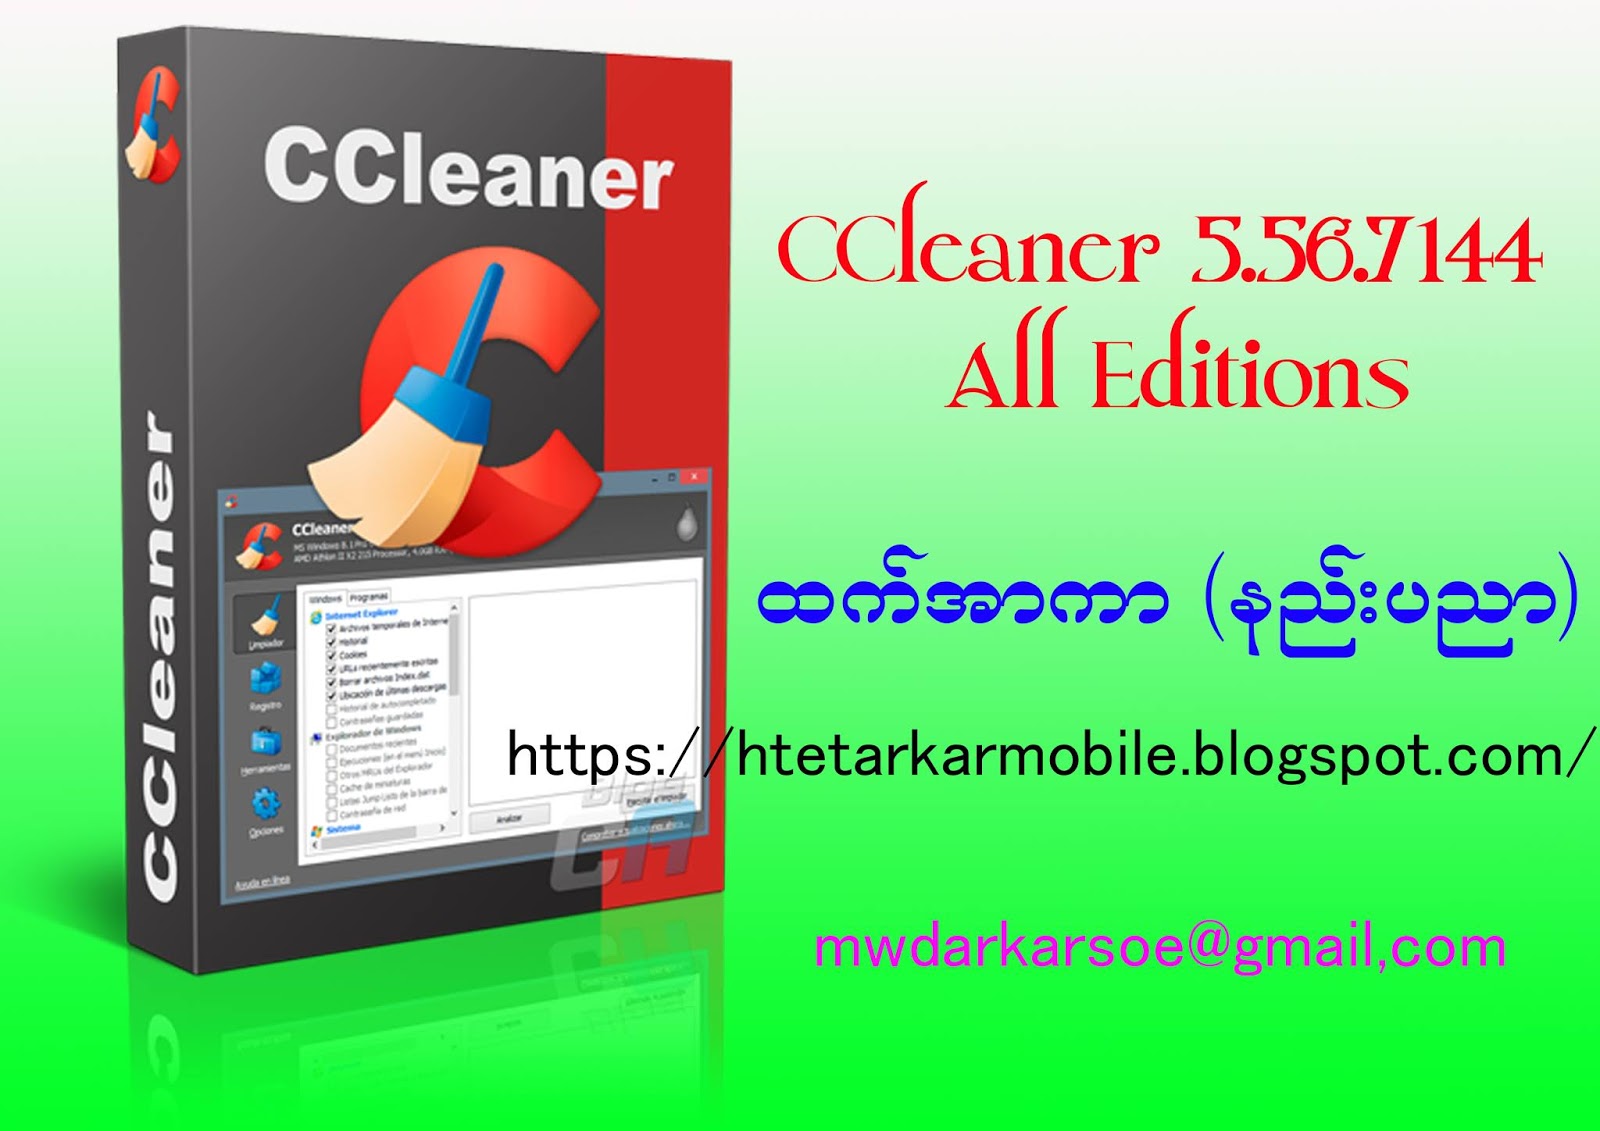 ccleaner pro 5.56.7144 key